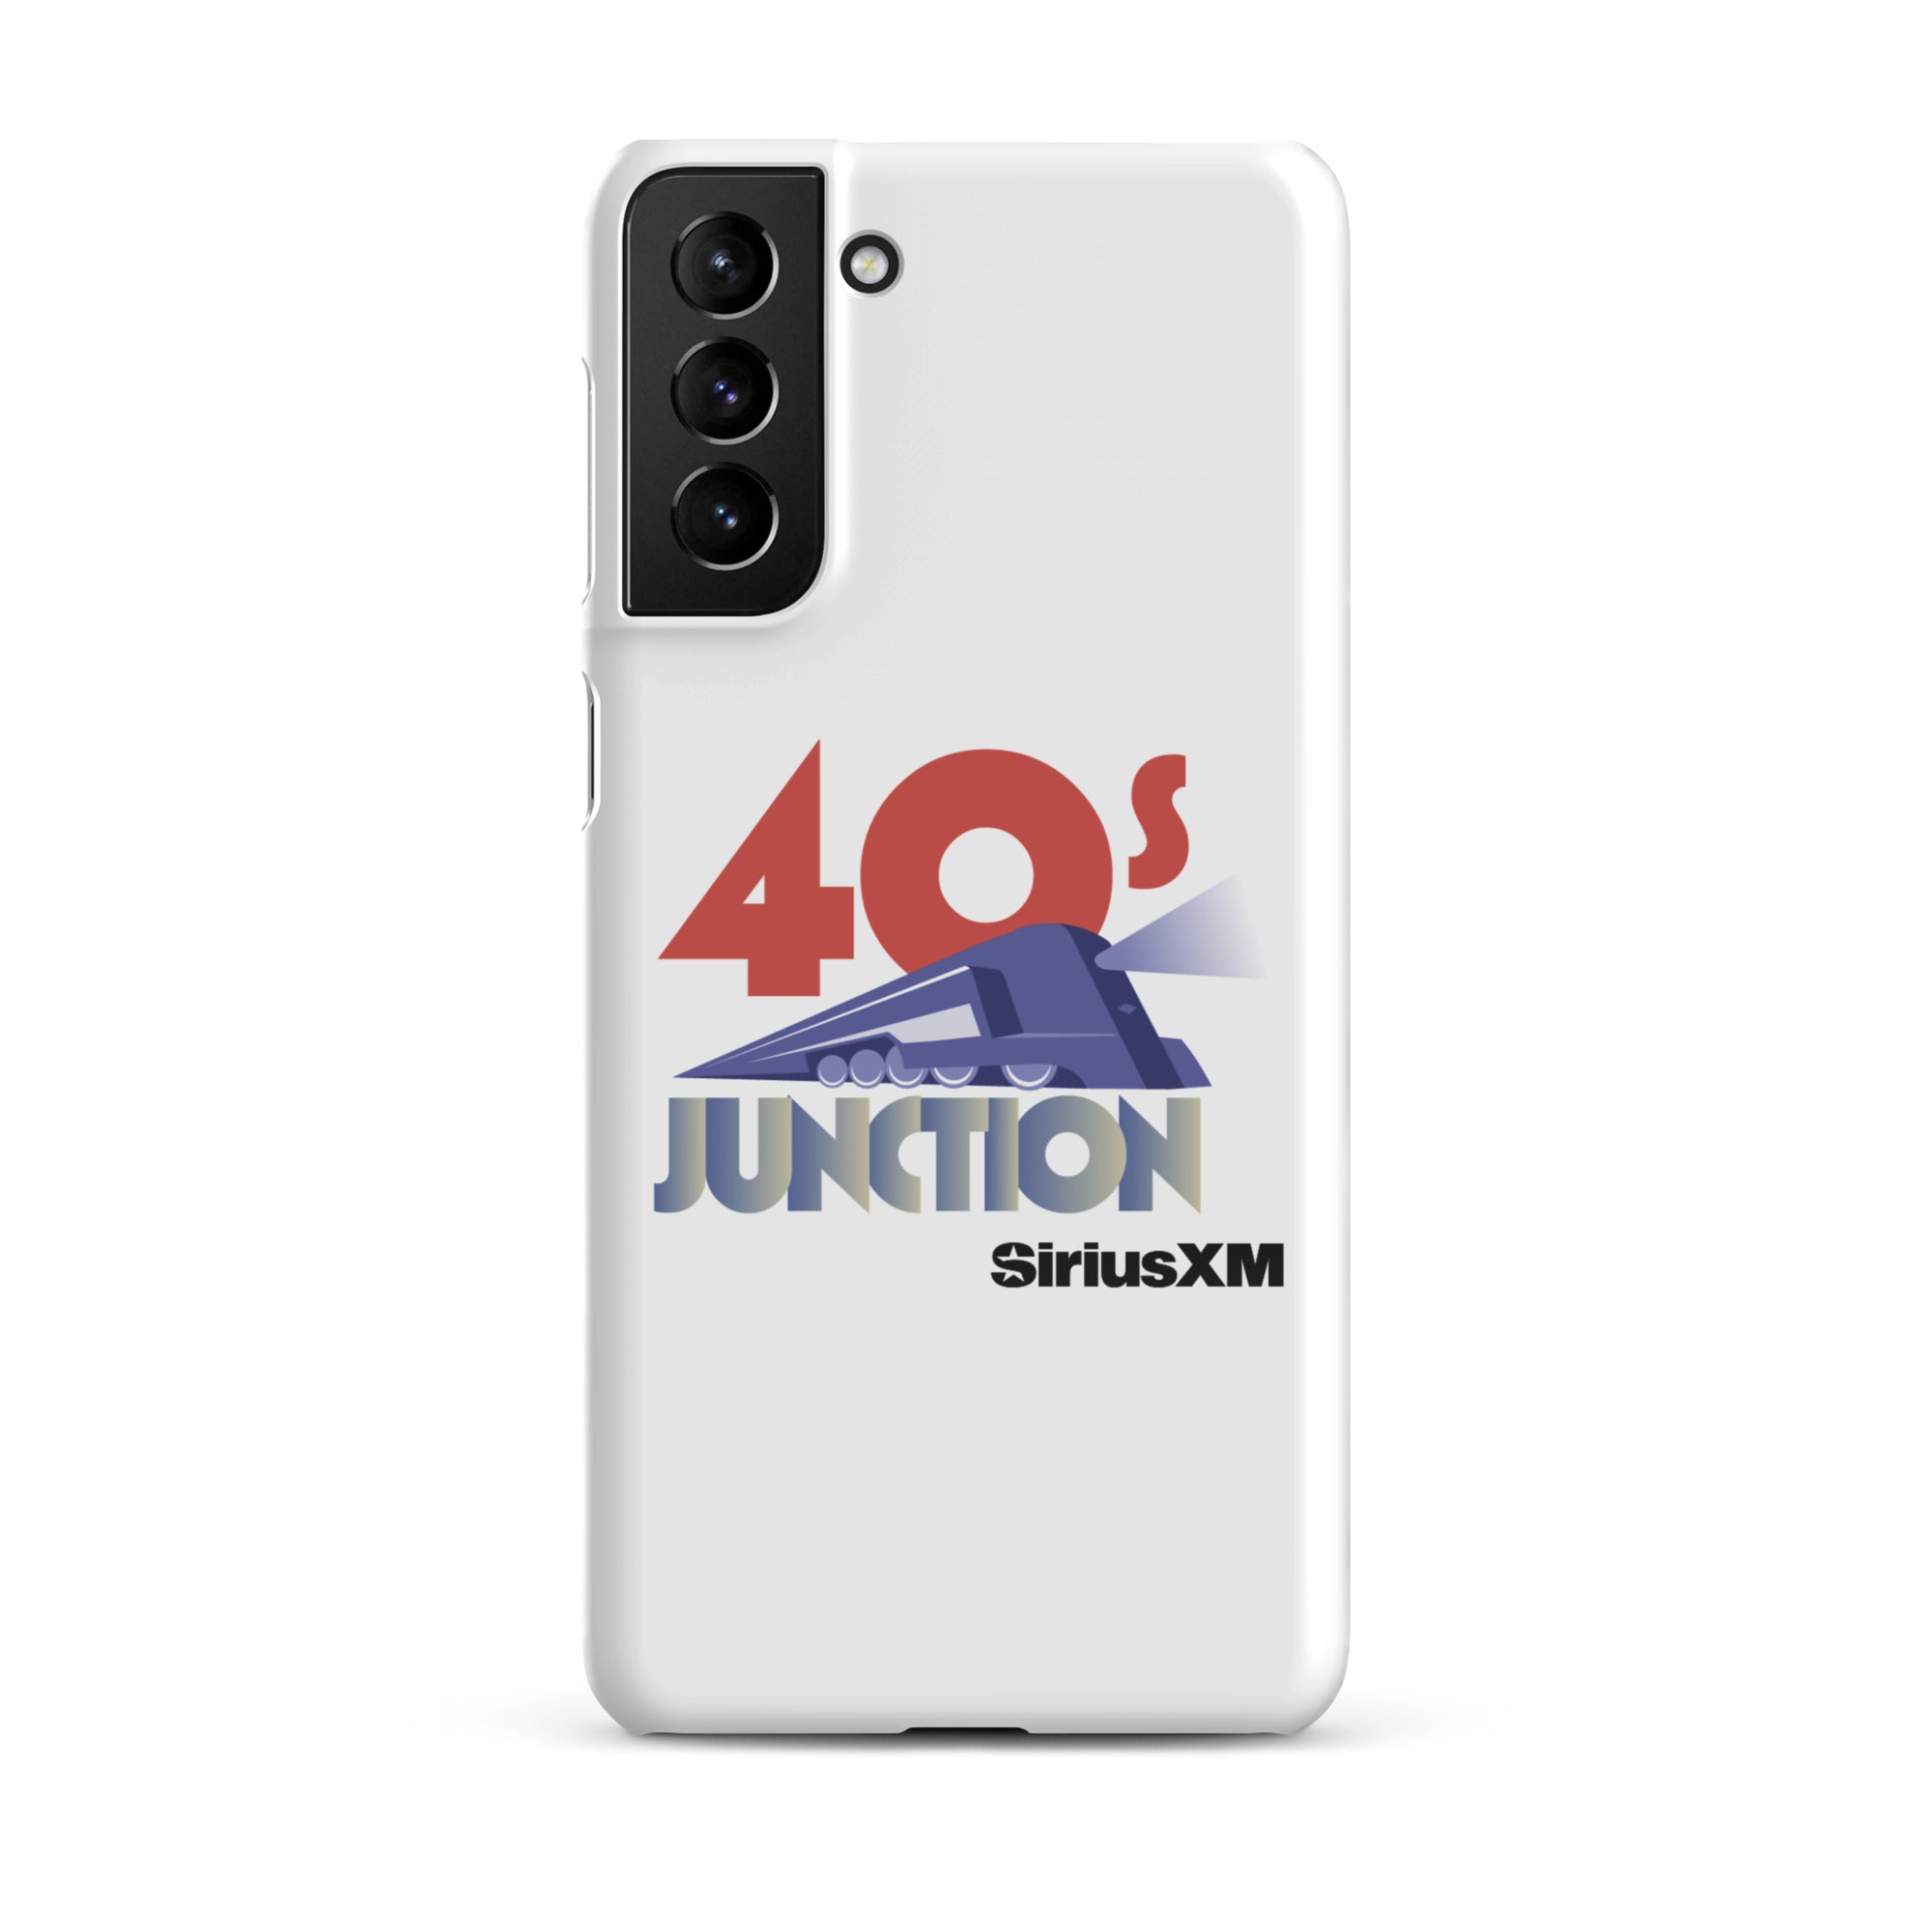 40s Junction: Samsung® Snap Case